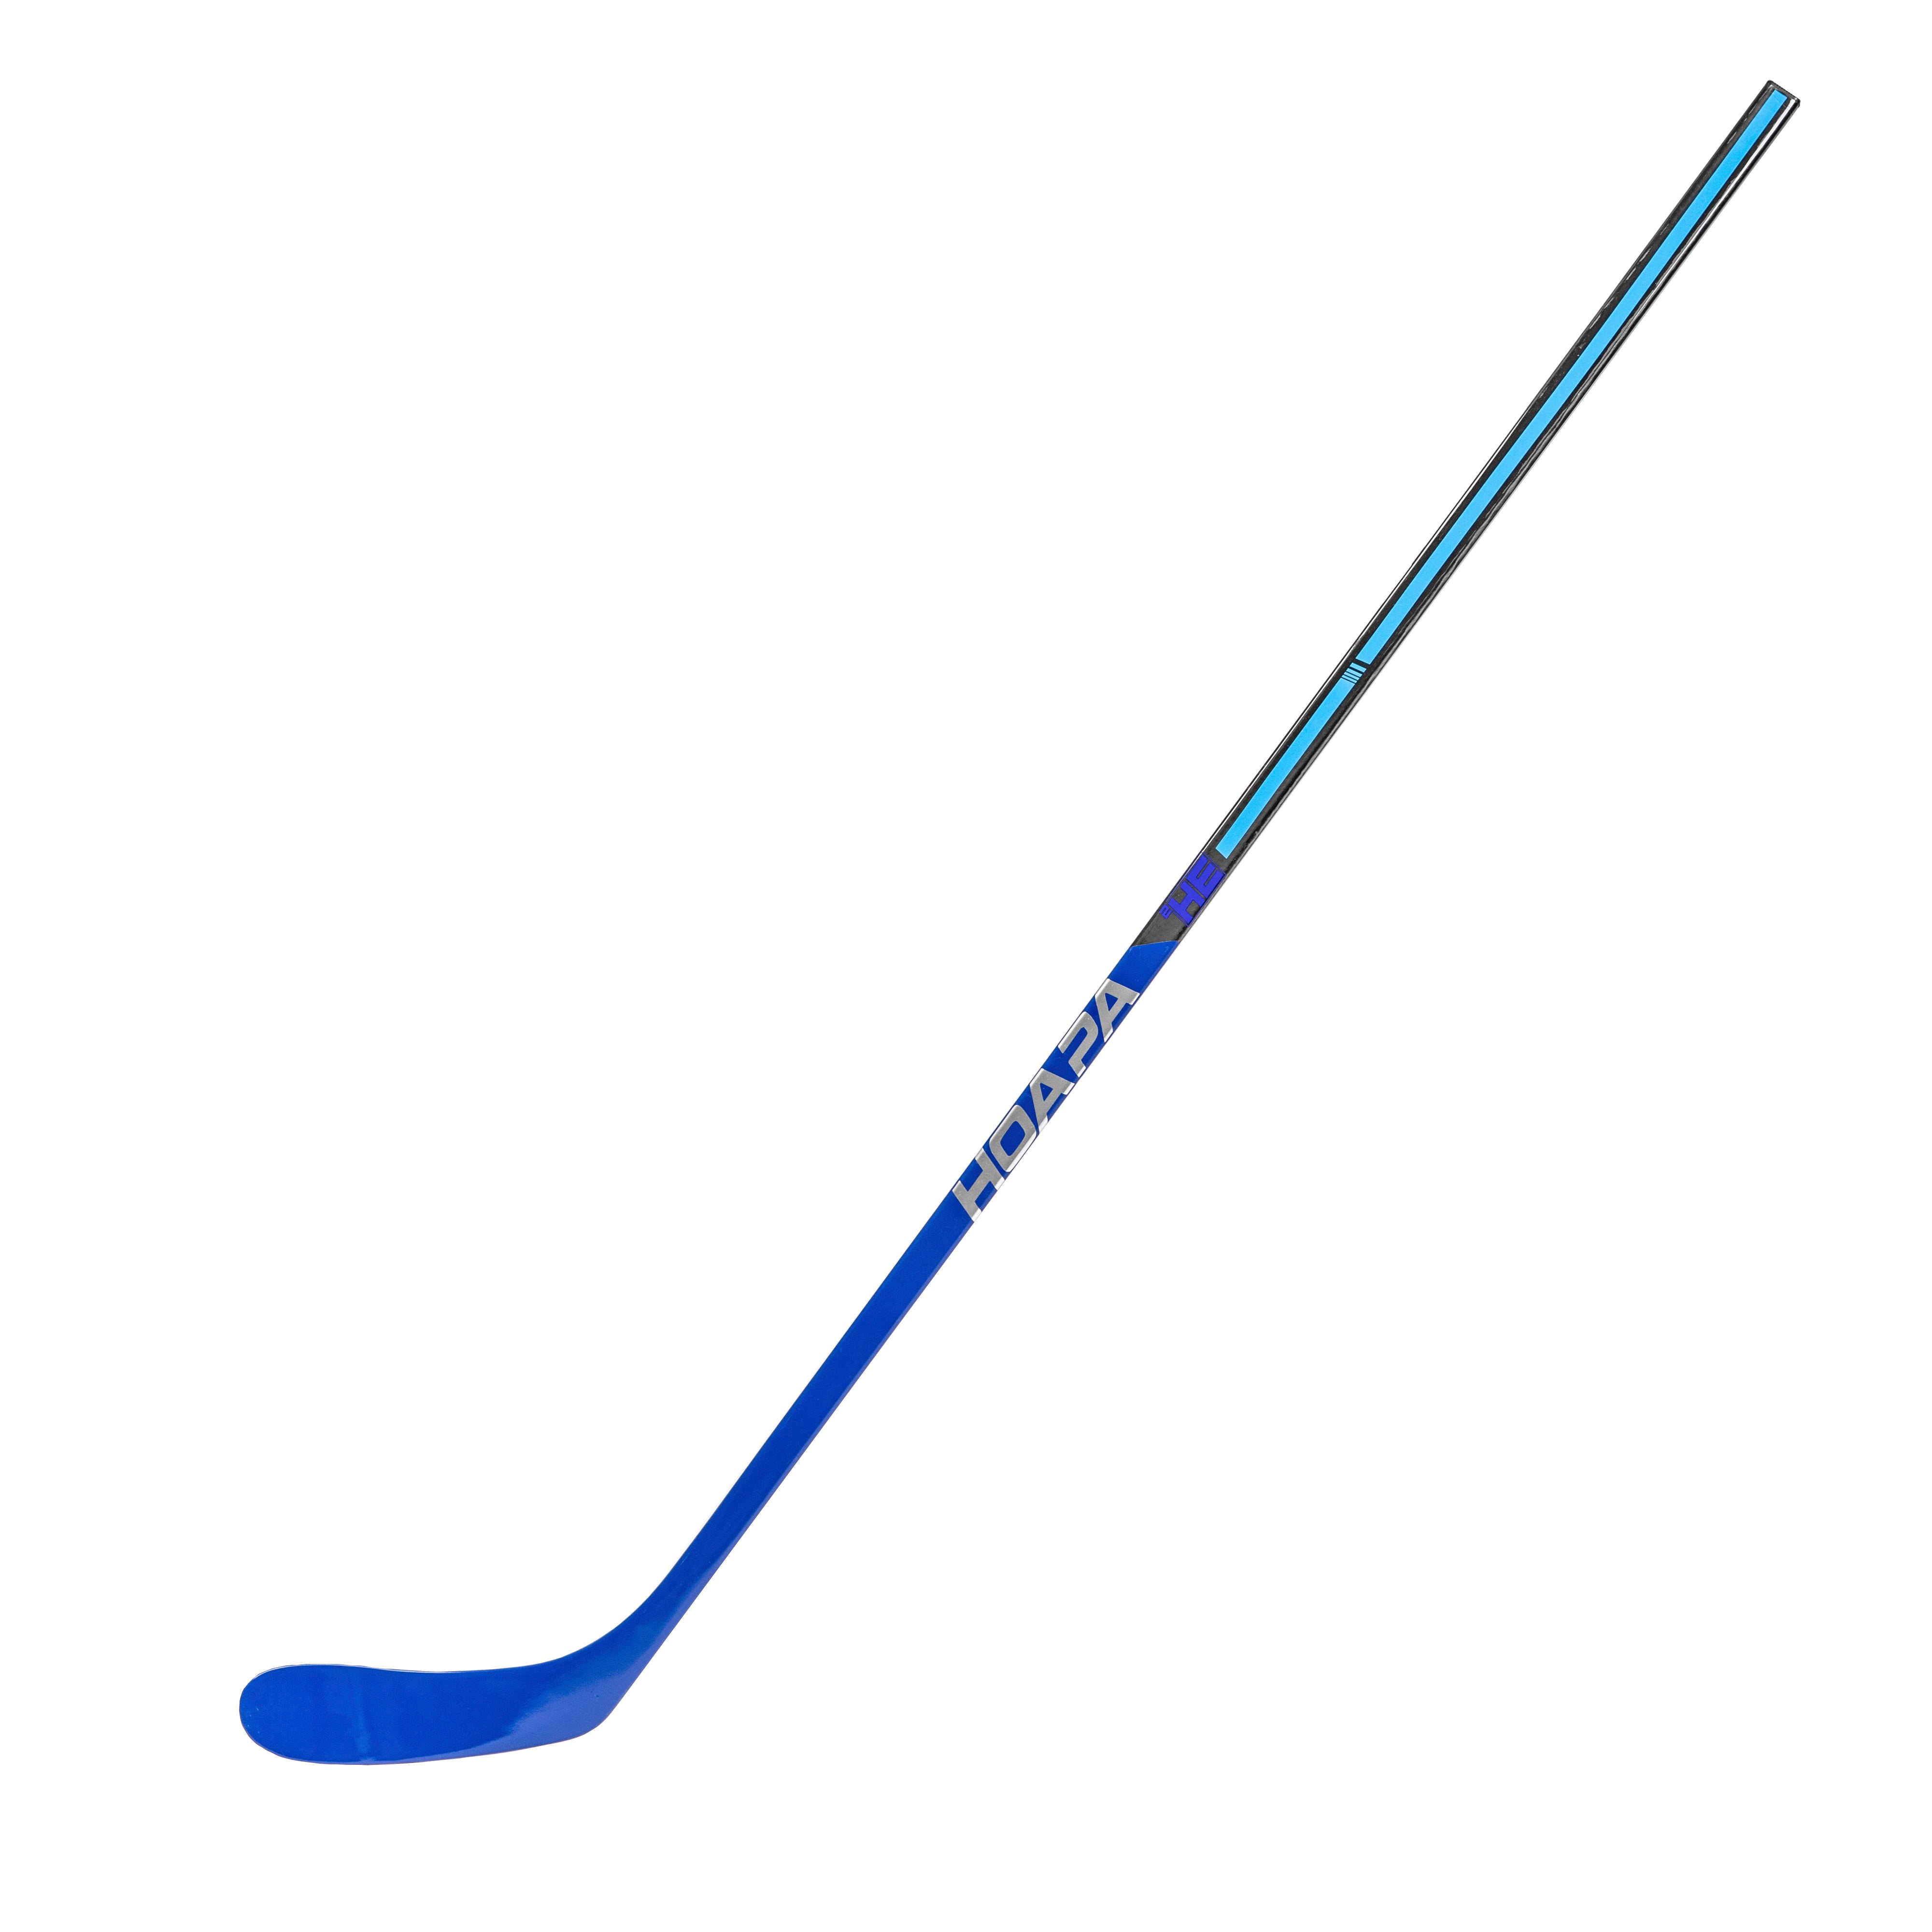 19 Mini Plastic Hockey Stick - HSP